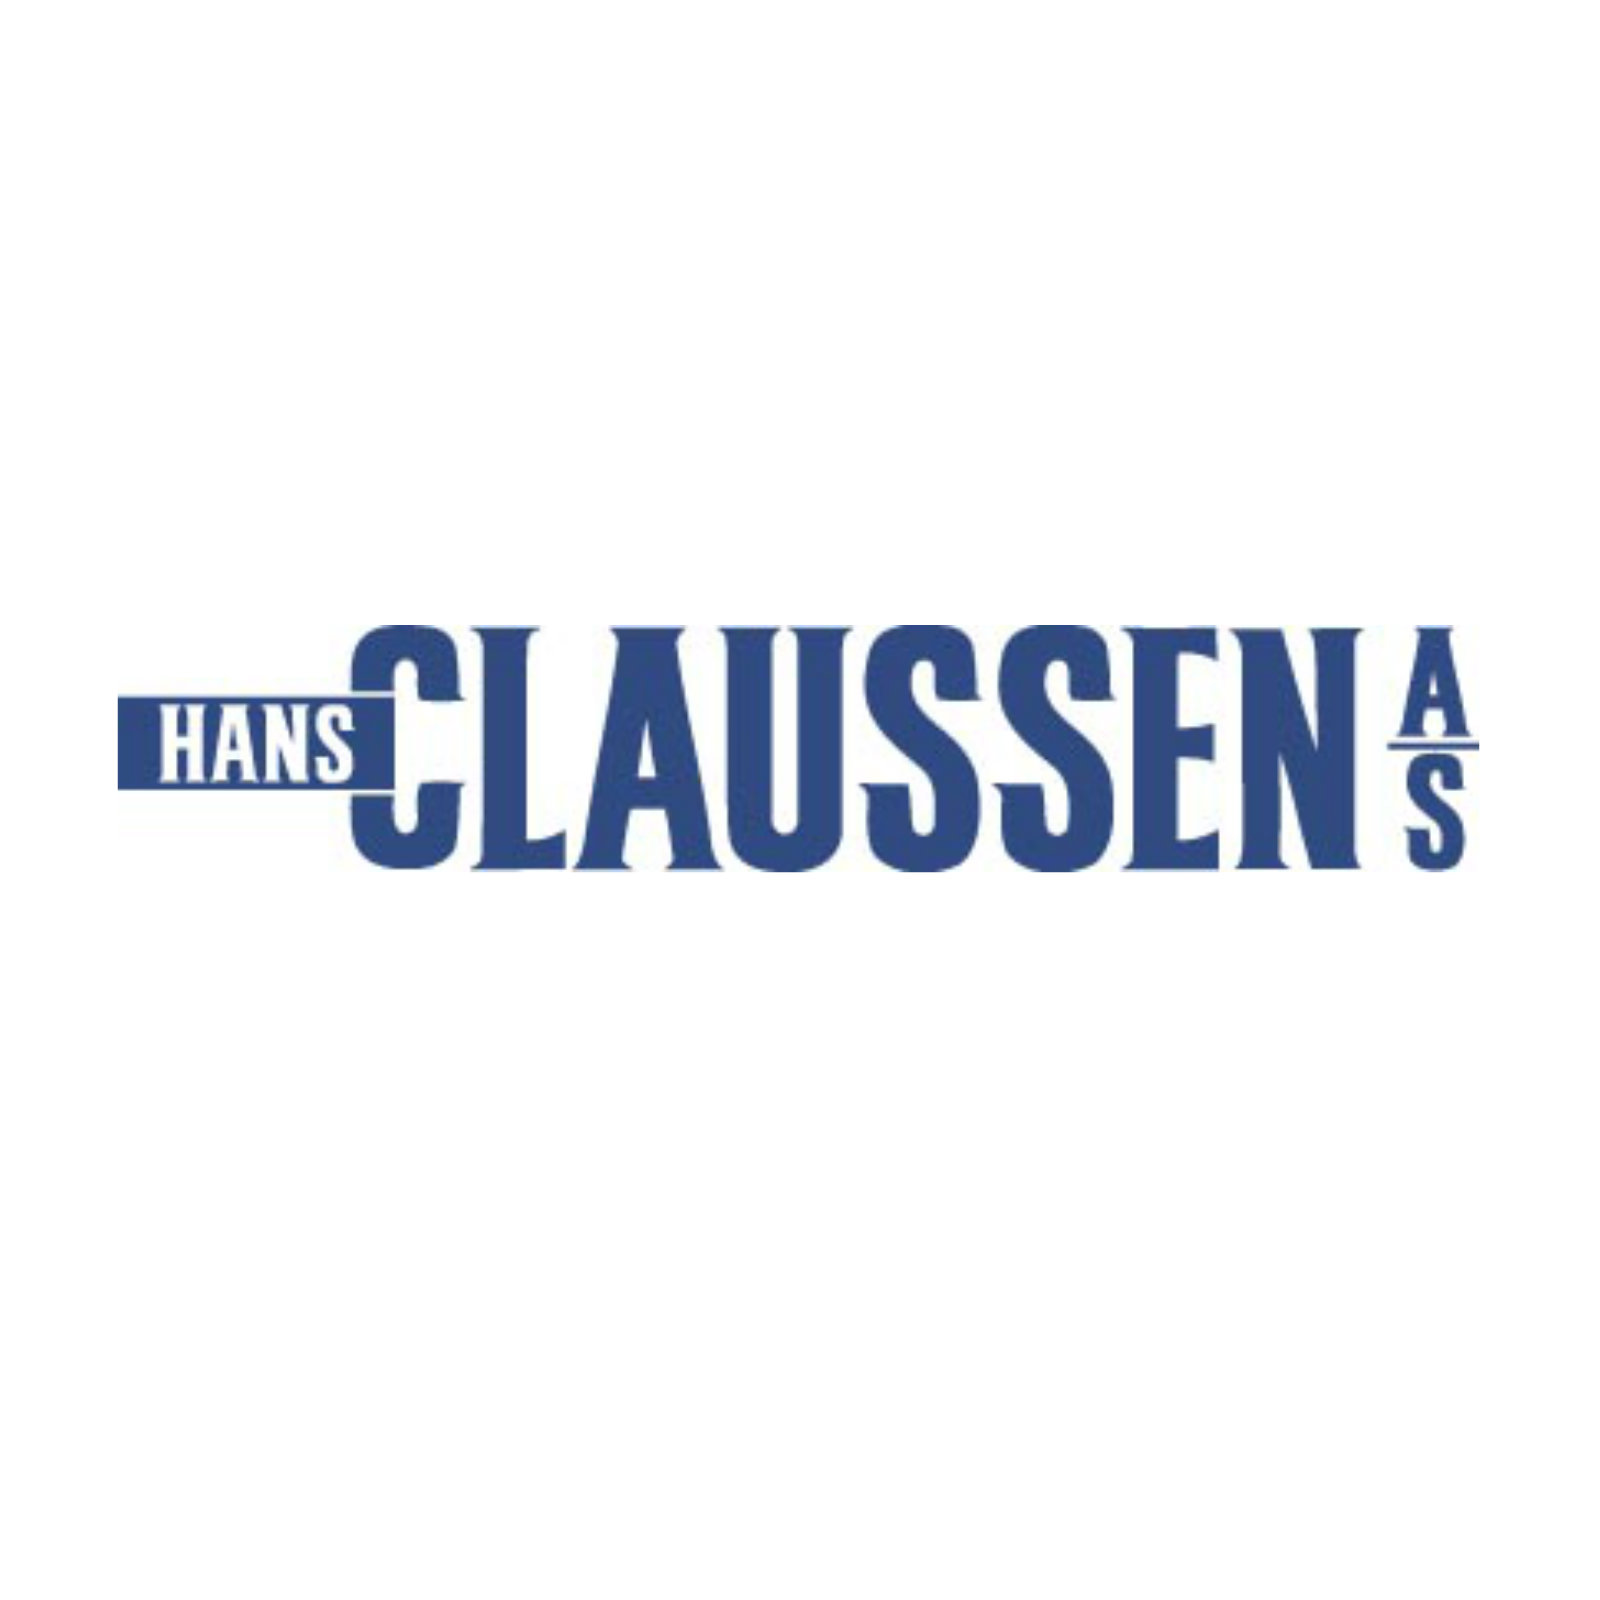 Norway / Hans Claussen AS